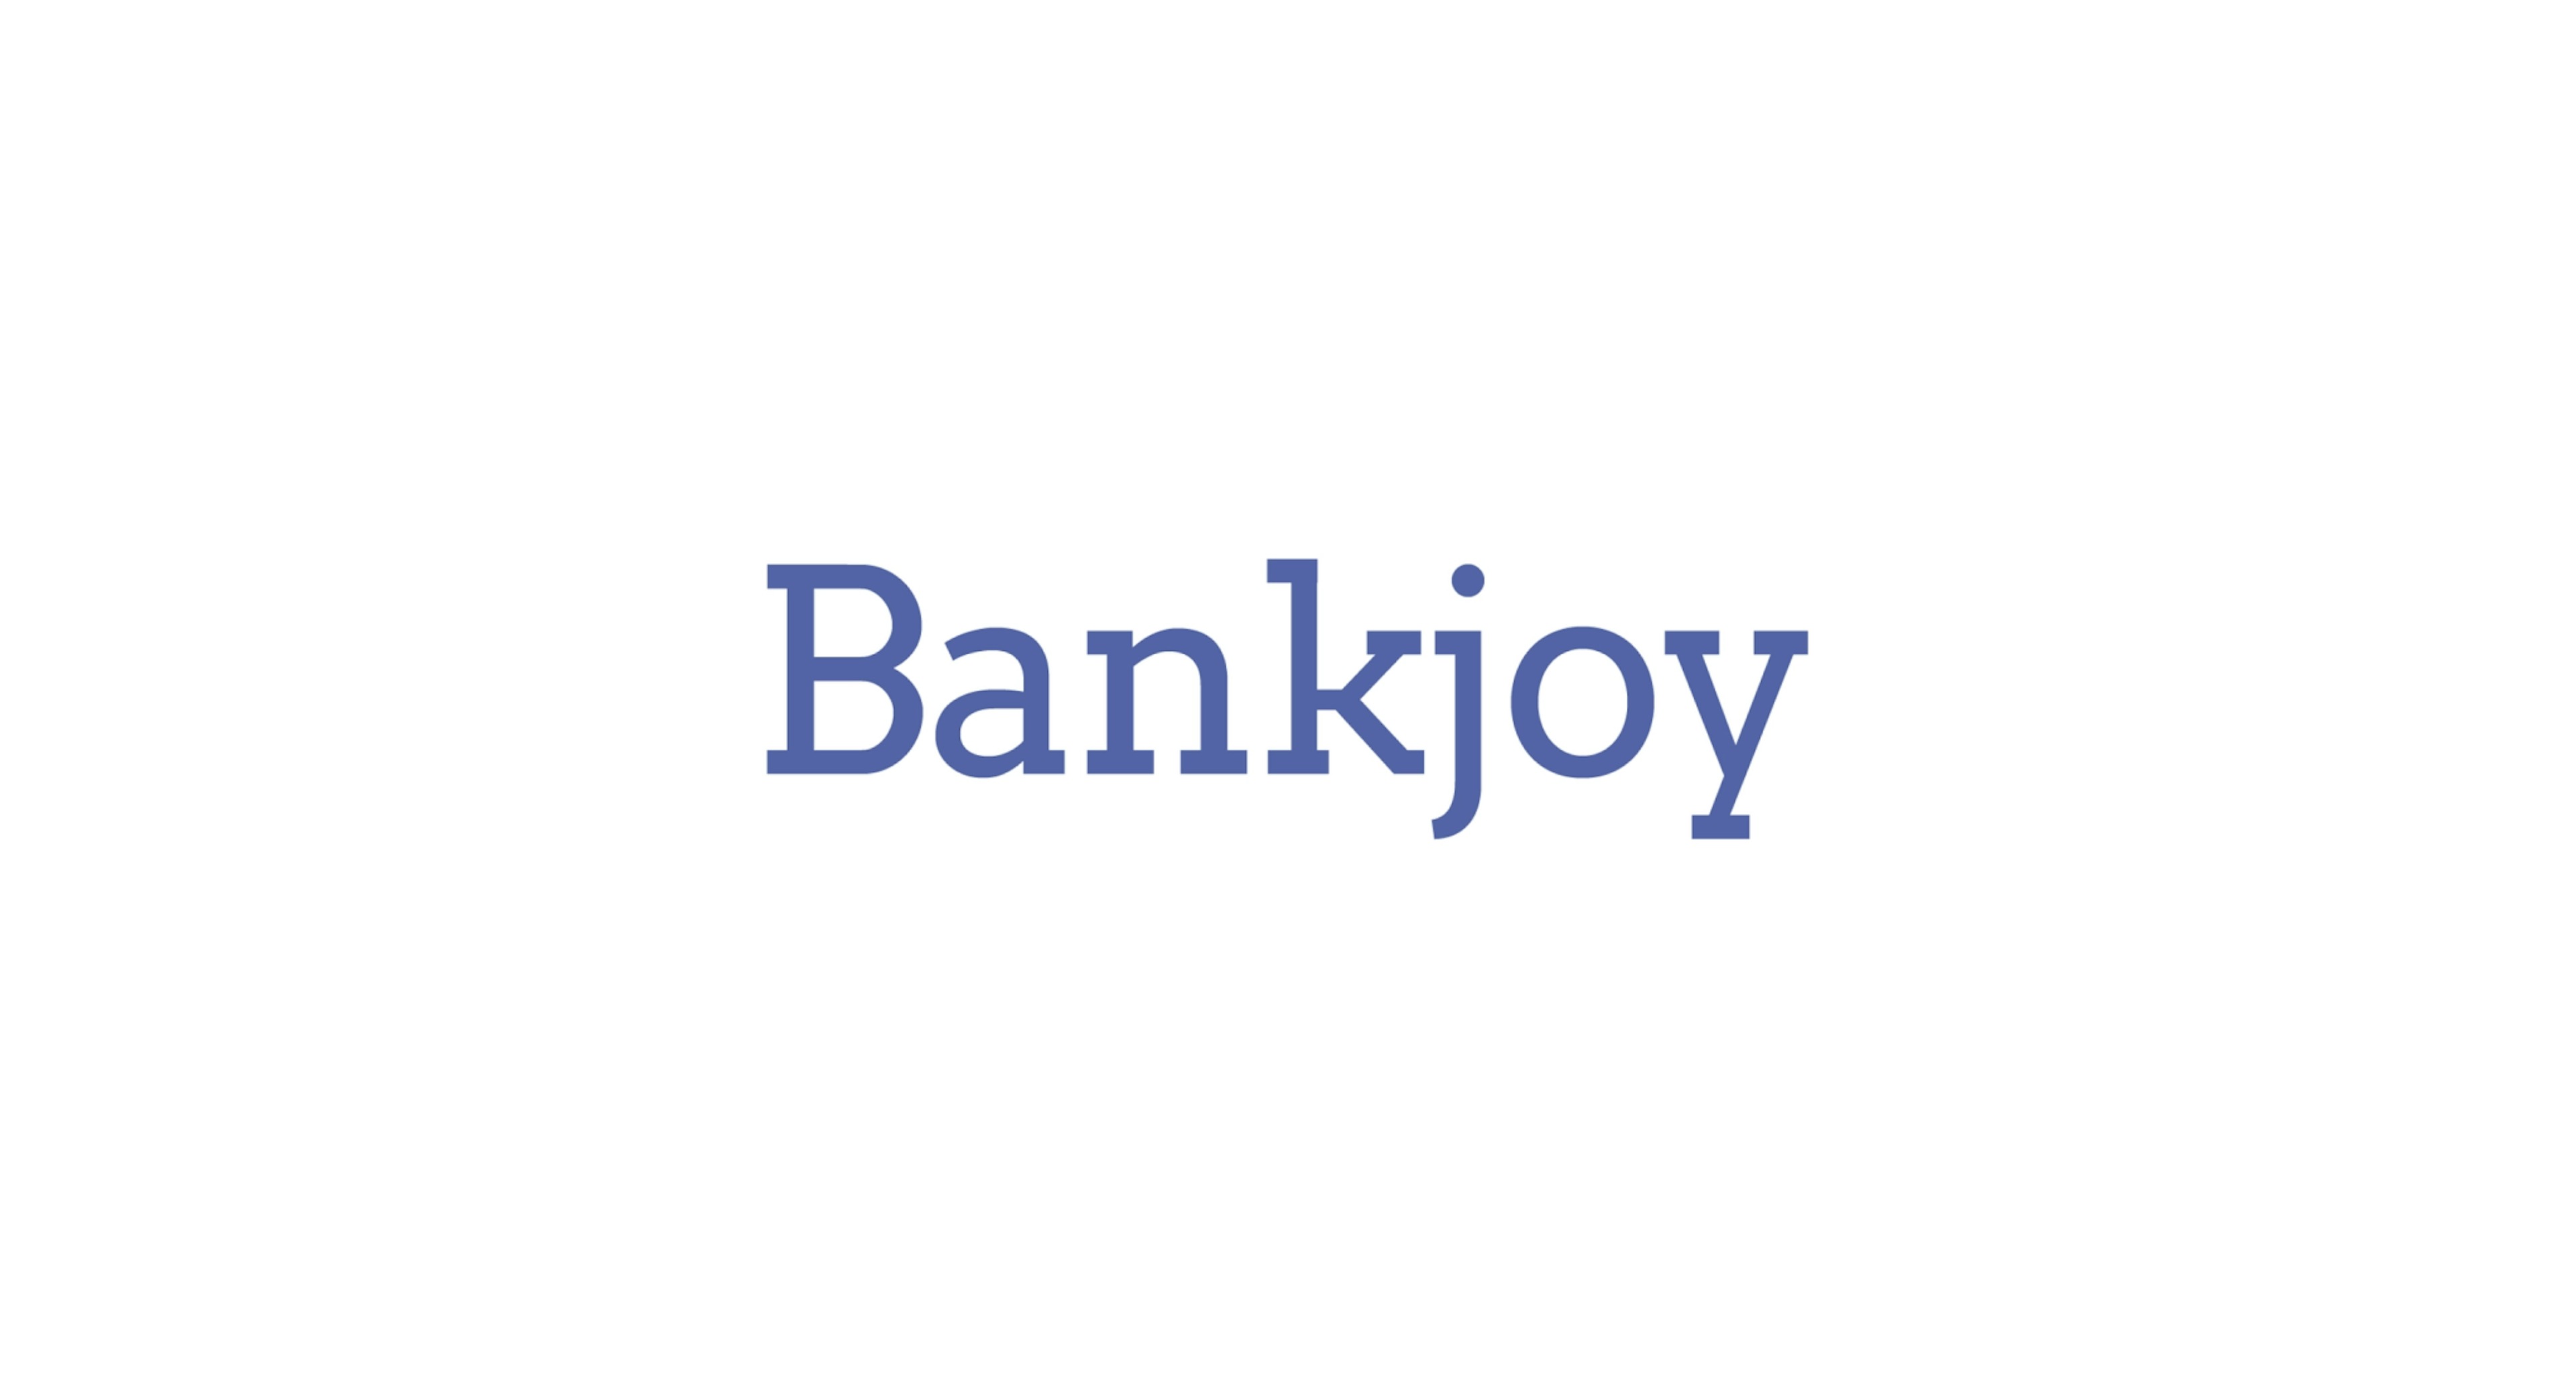 bankjoy old logo